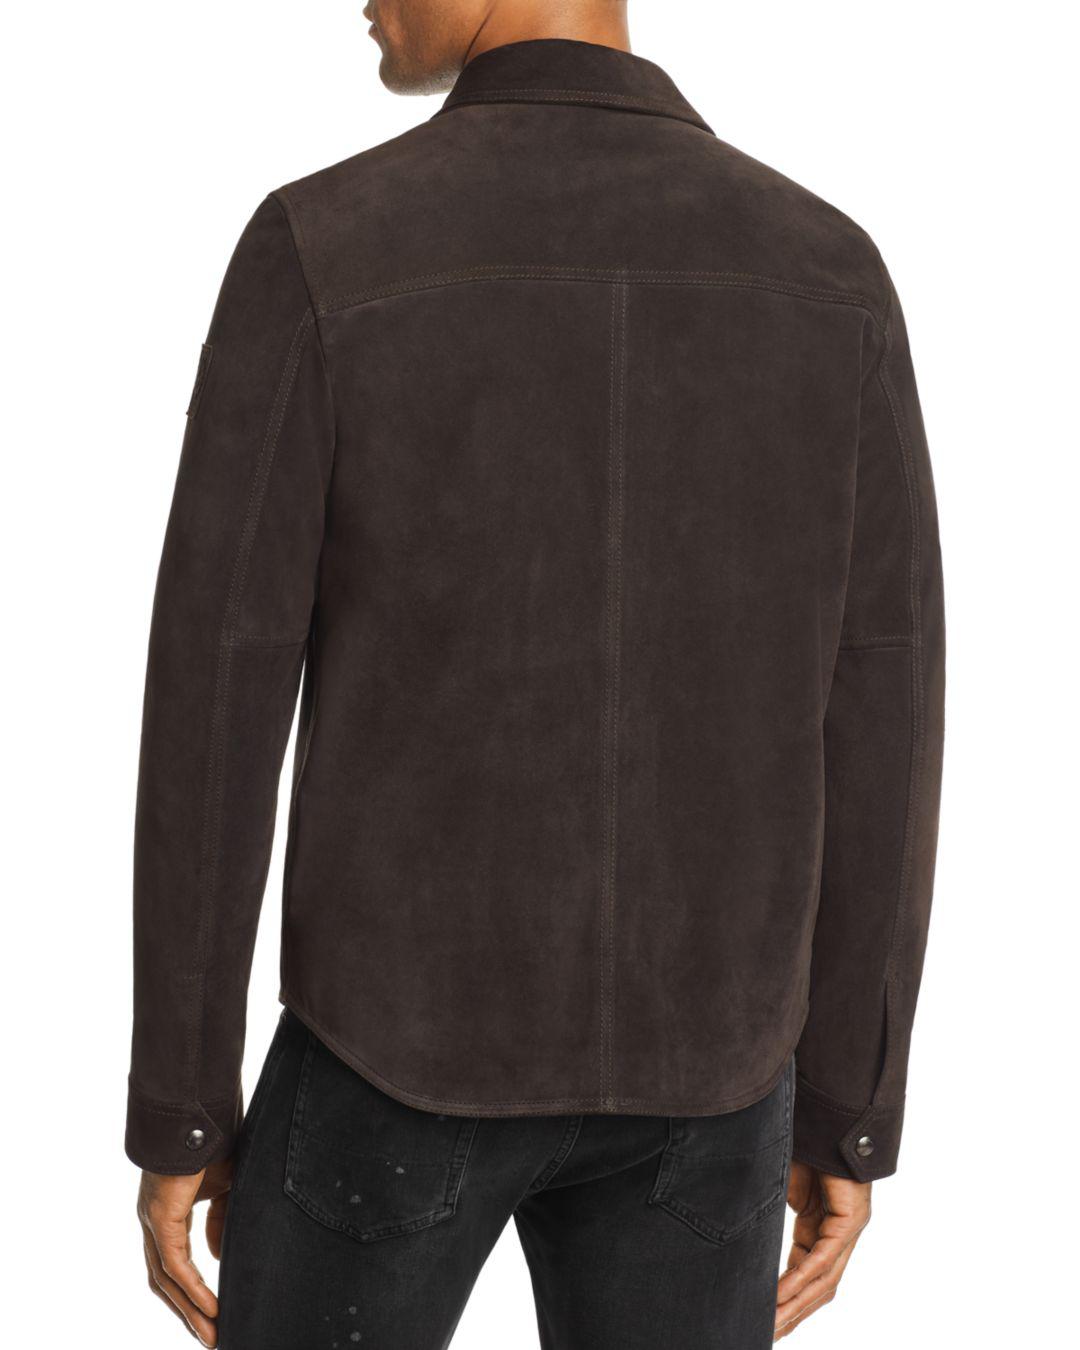 Belstaff Malyon Suede Shirt Jacket in Black for Men - Lyst